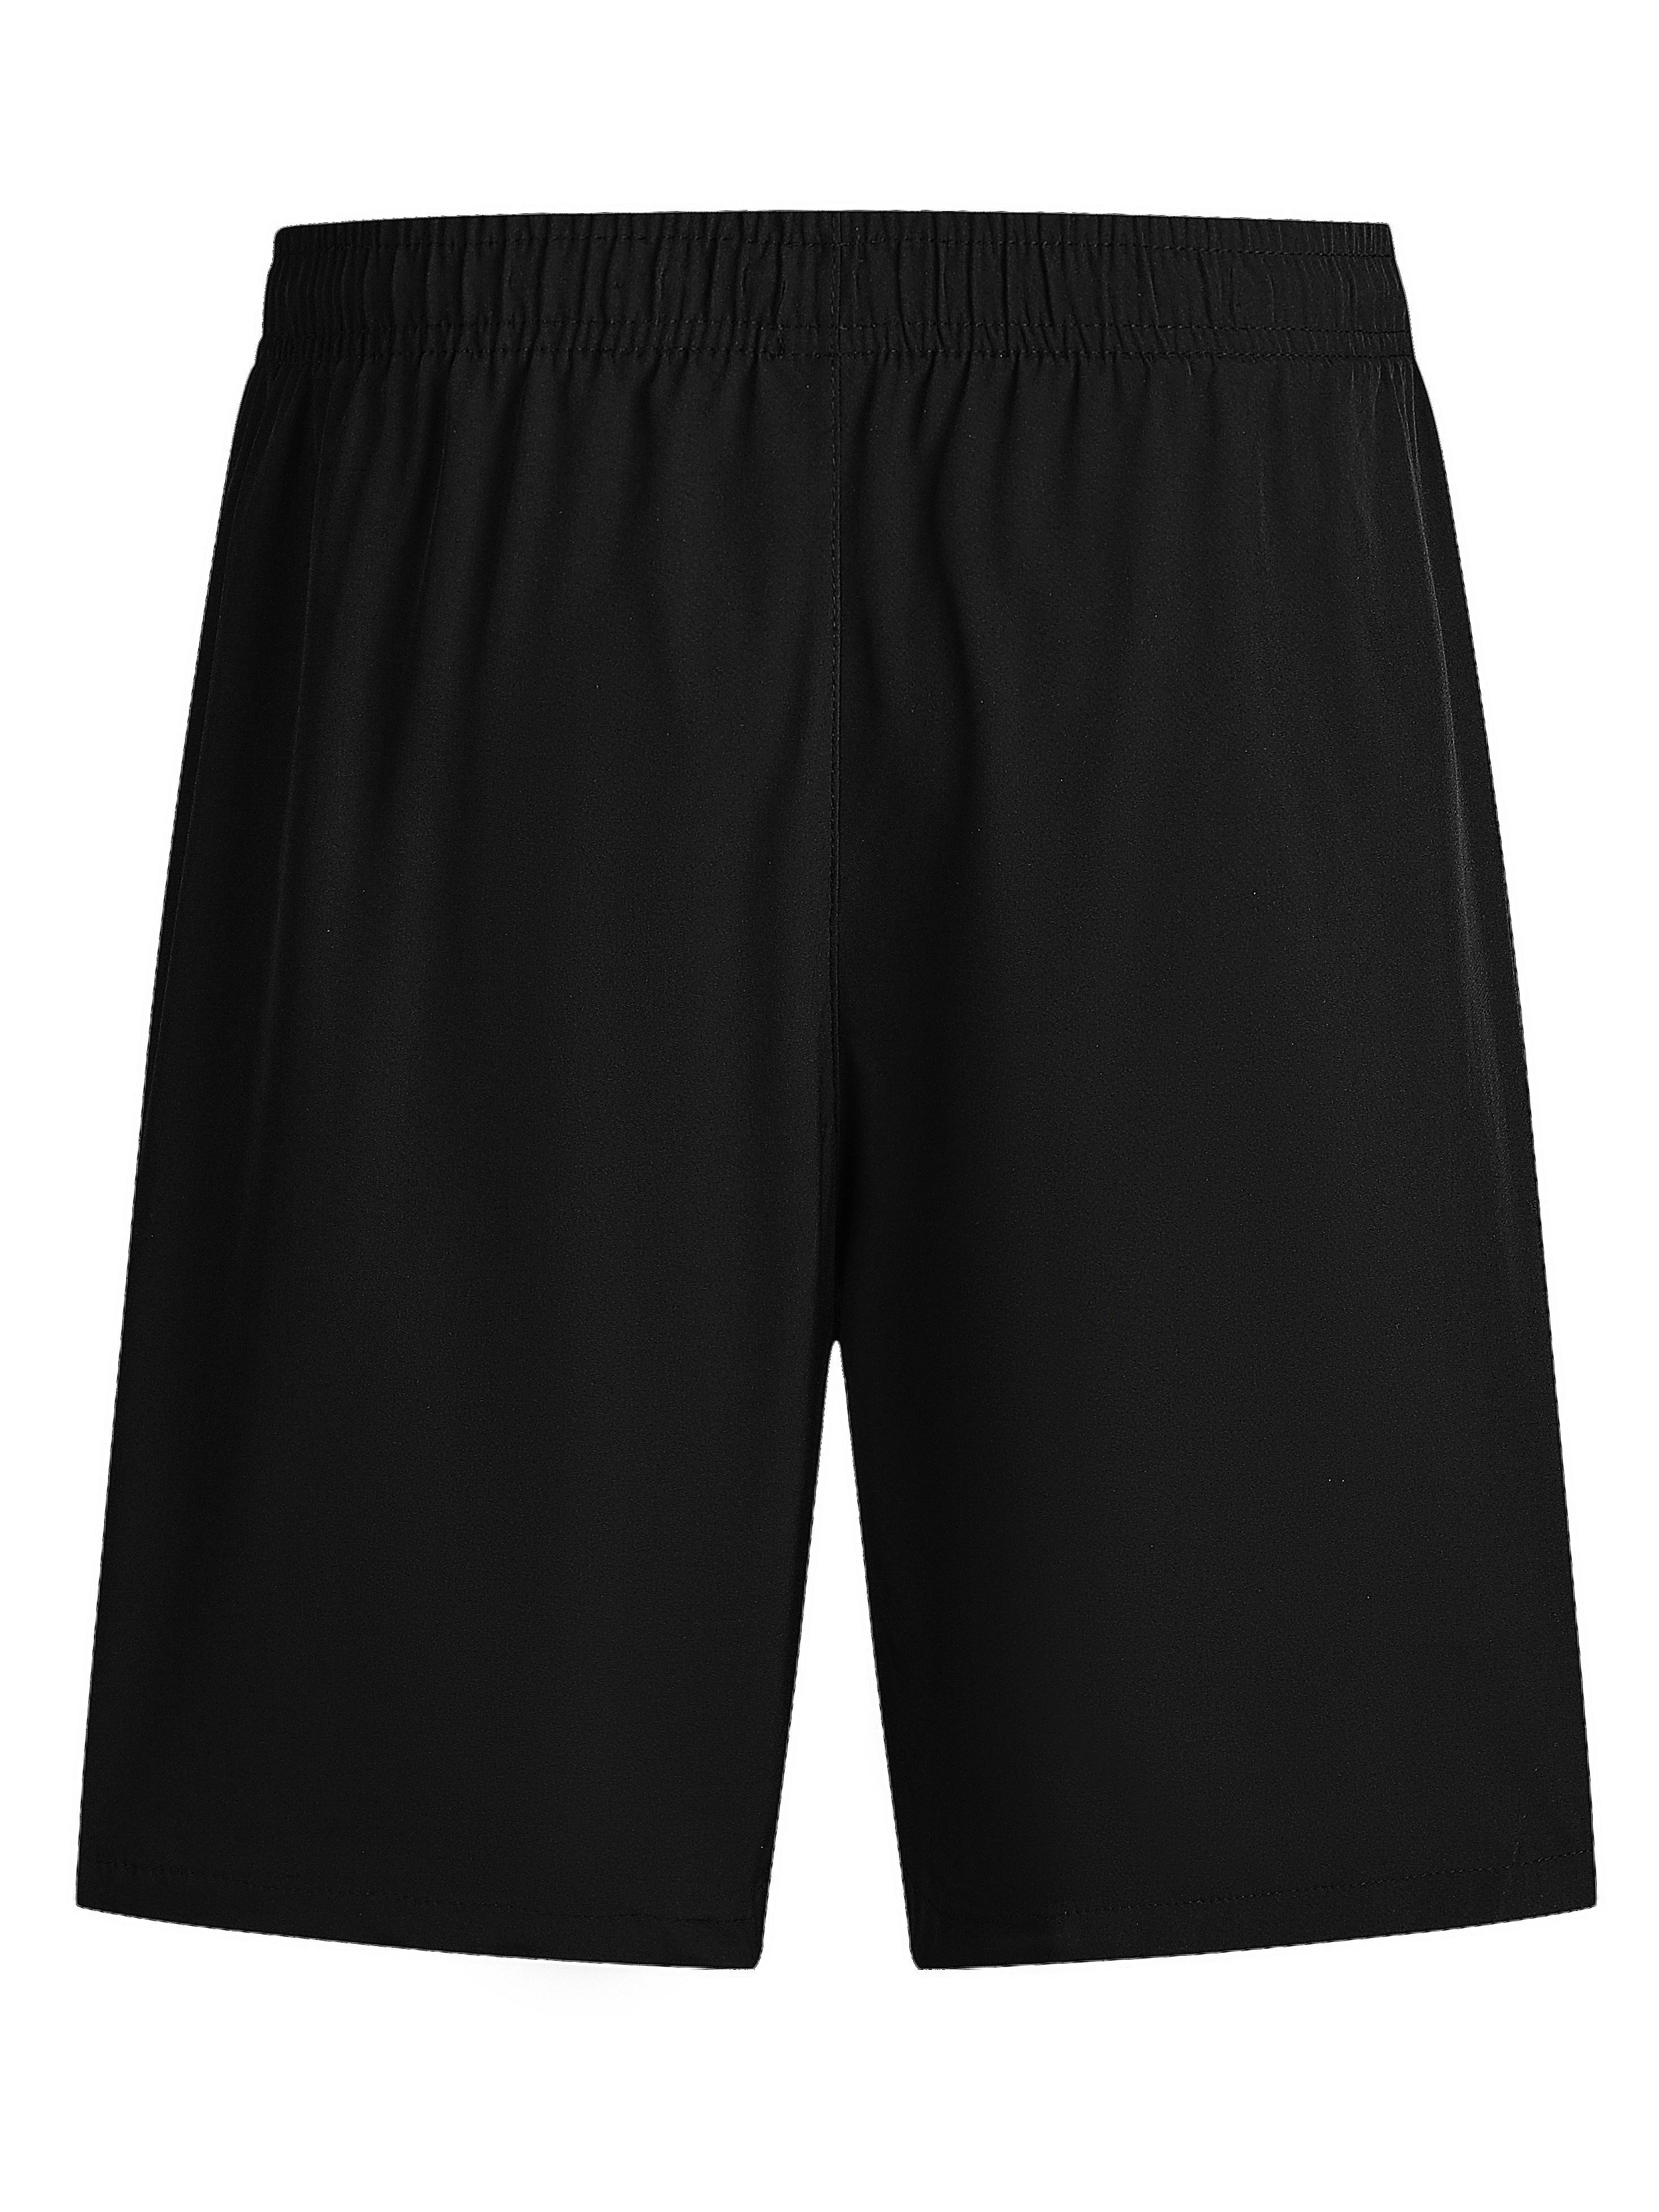 Buy Men's Running Shorts with Zipper Pockets 7 Inch Lightweight Quick Dry  Gym Workout Athletic Shorts for Men, Dark Khaki, Medium at